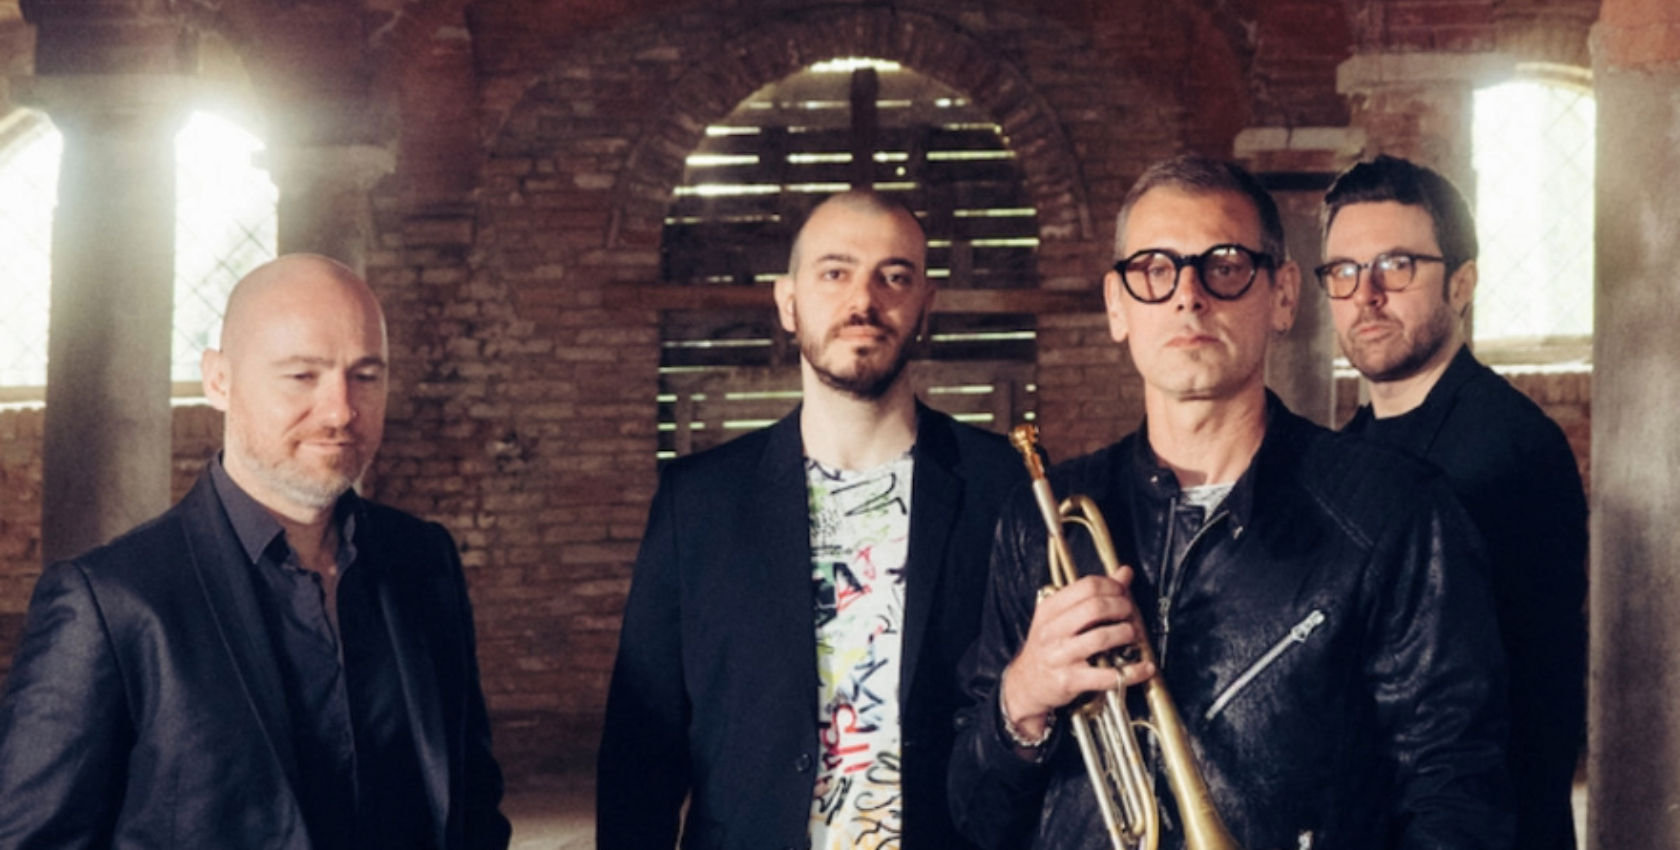 Fabrizio Bosso Quartet - We wonder